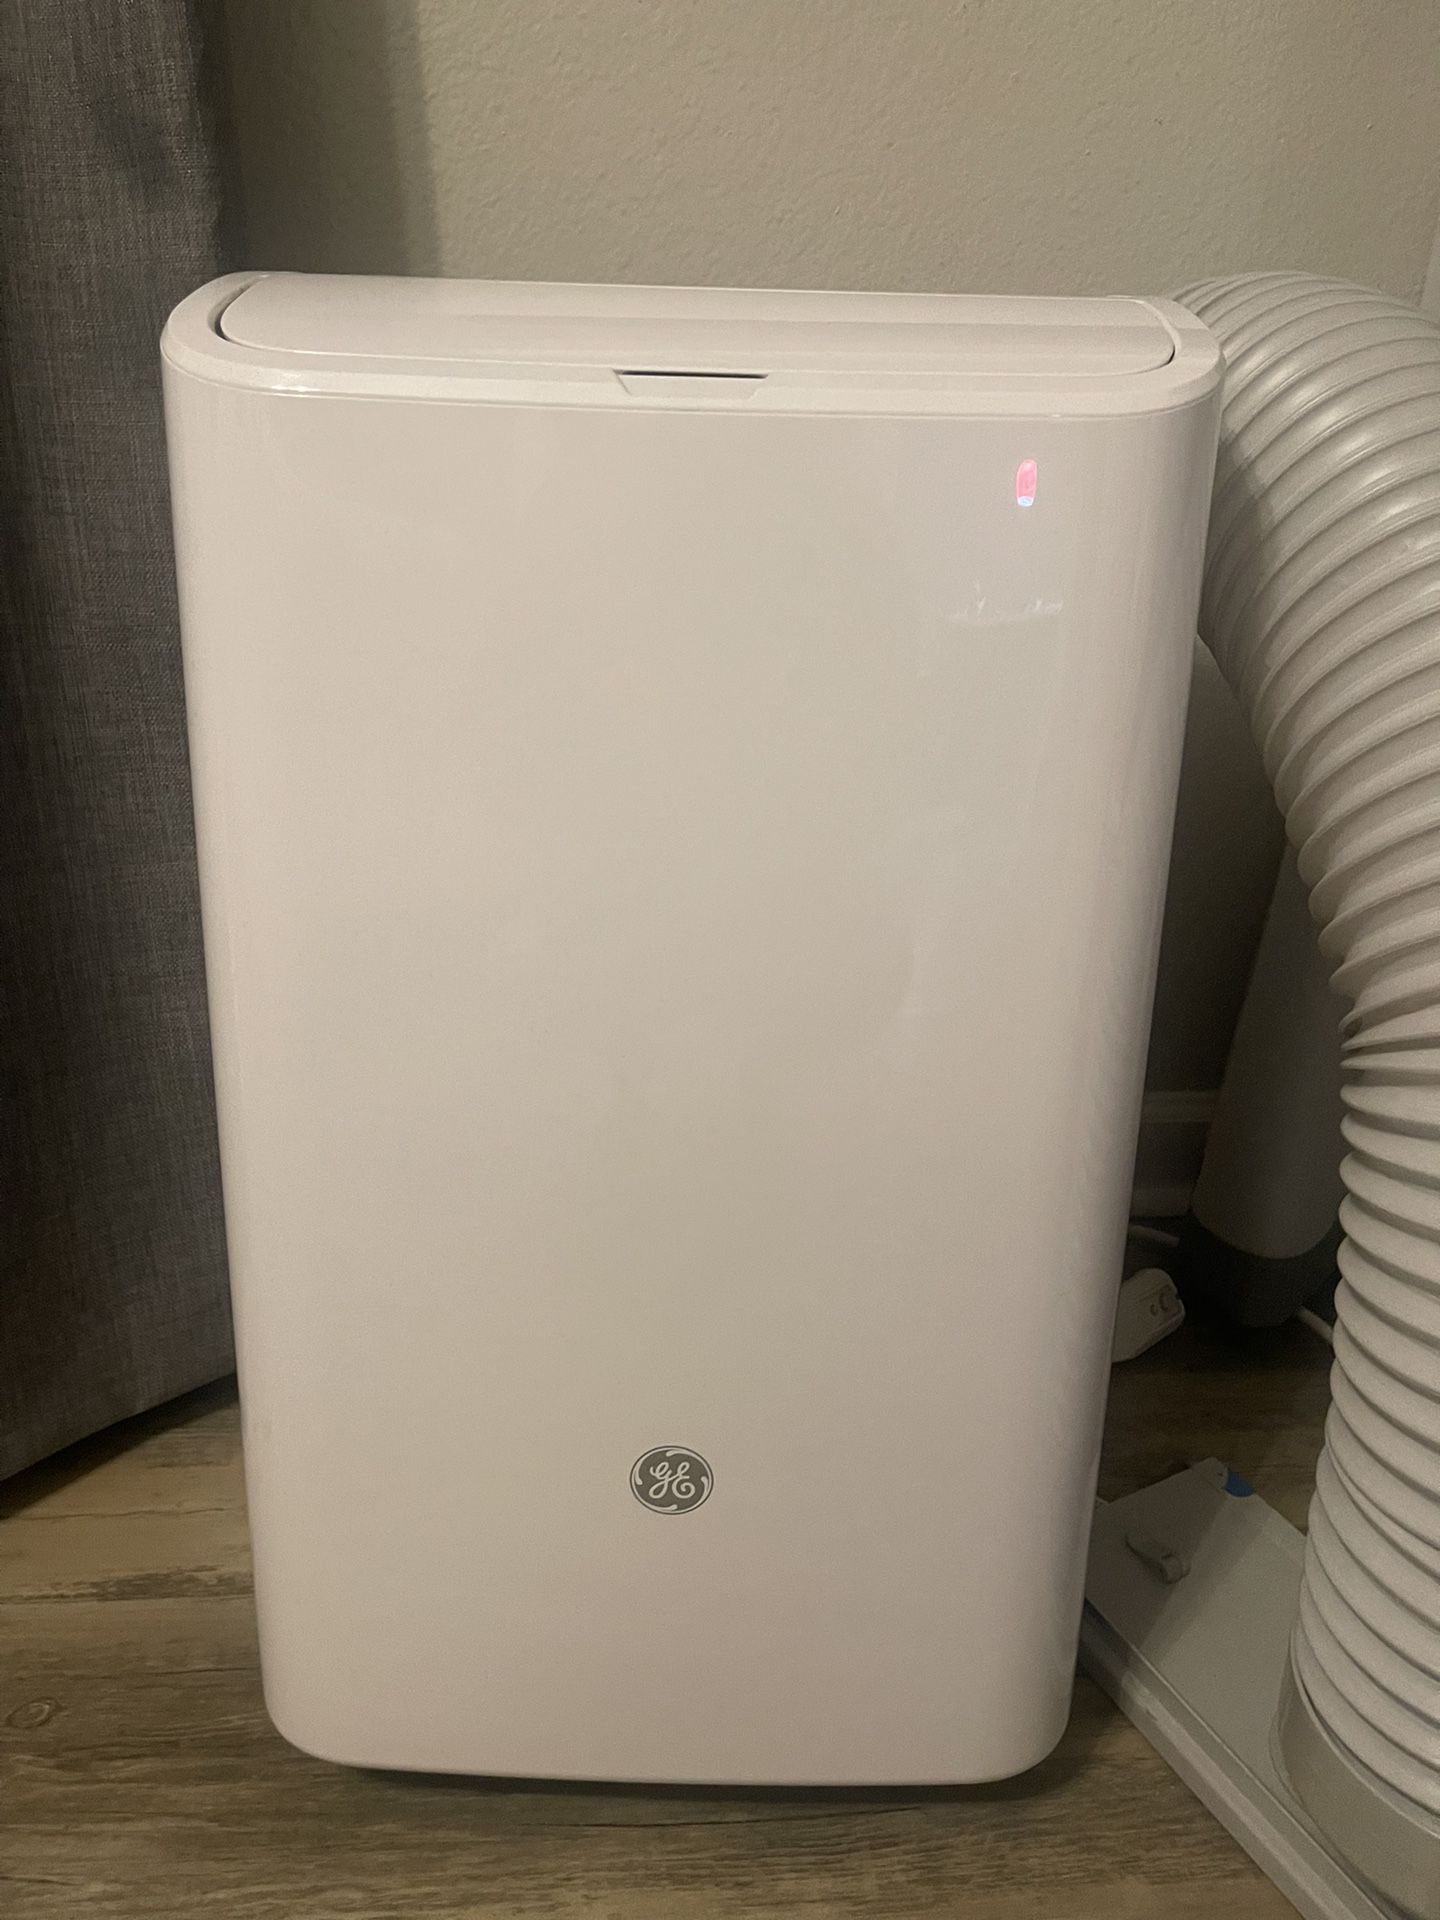 Portable GE Air Conditioner 